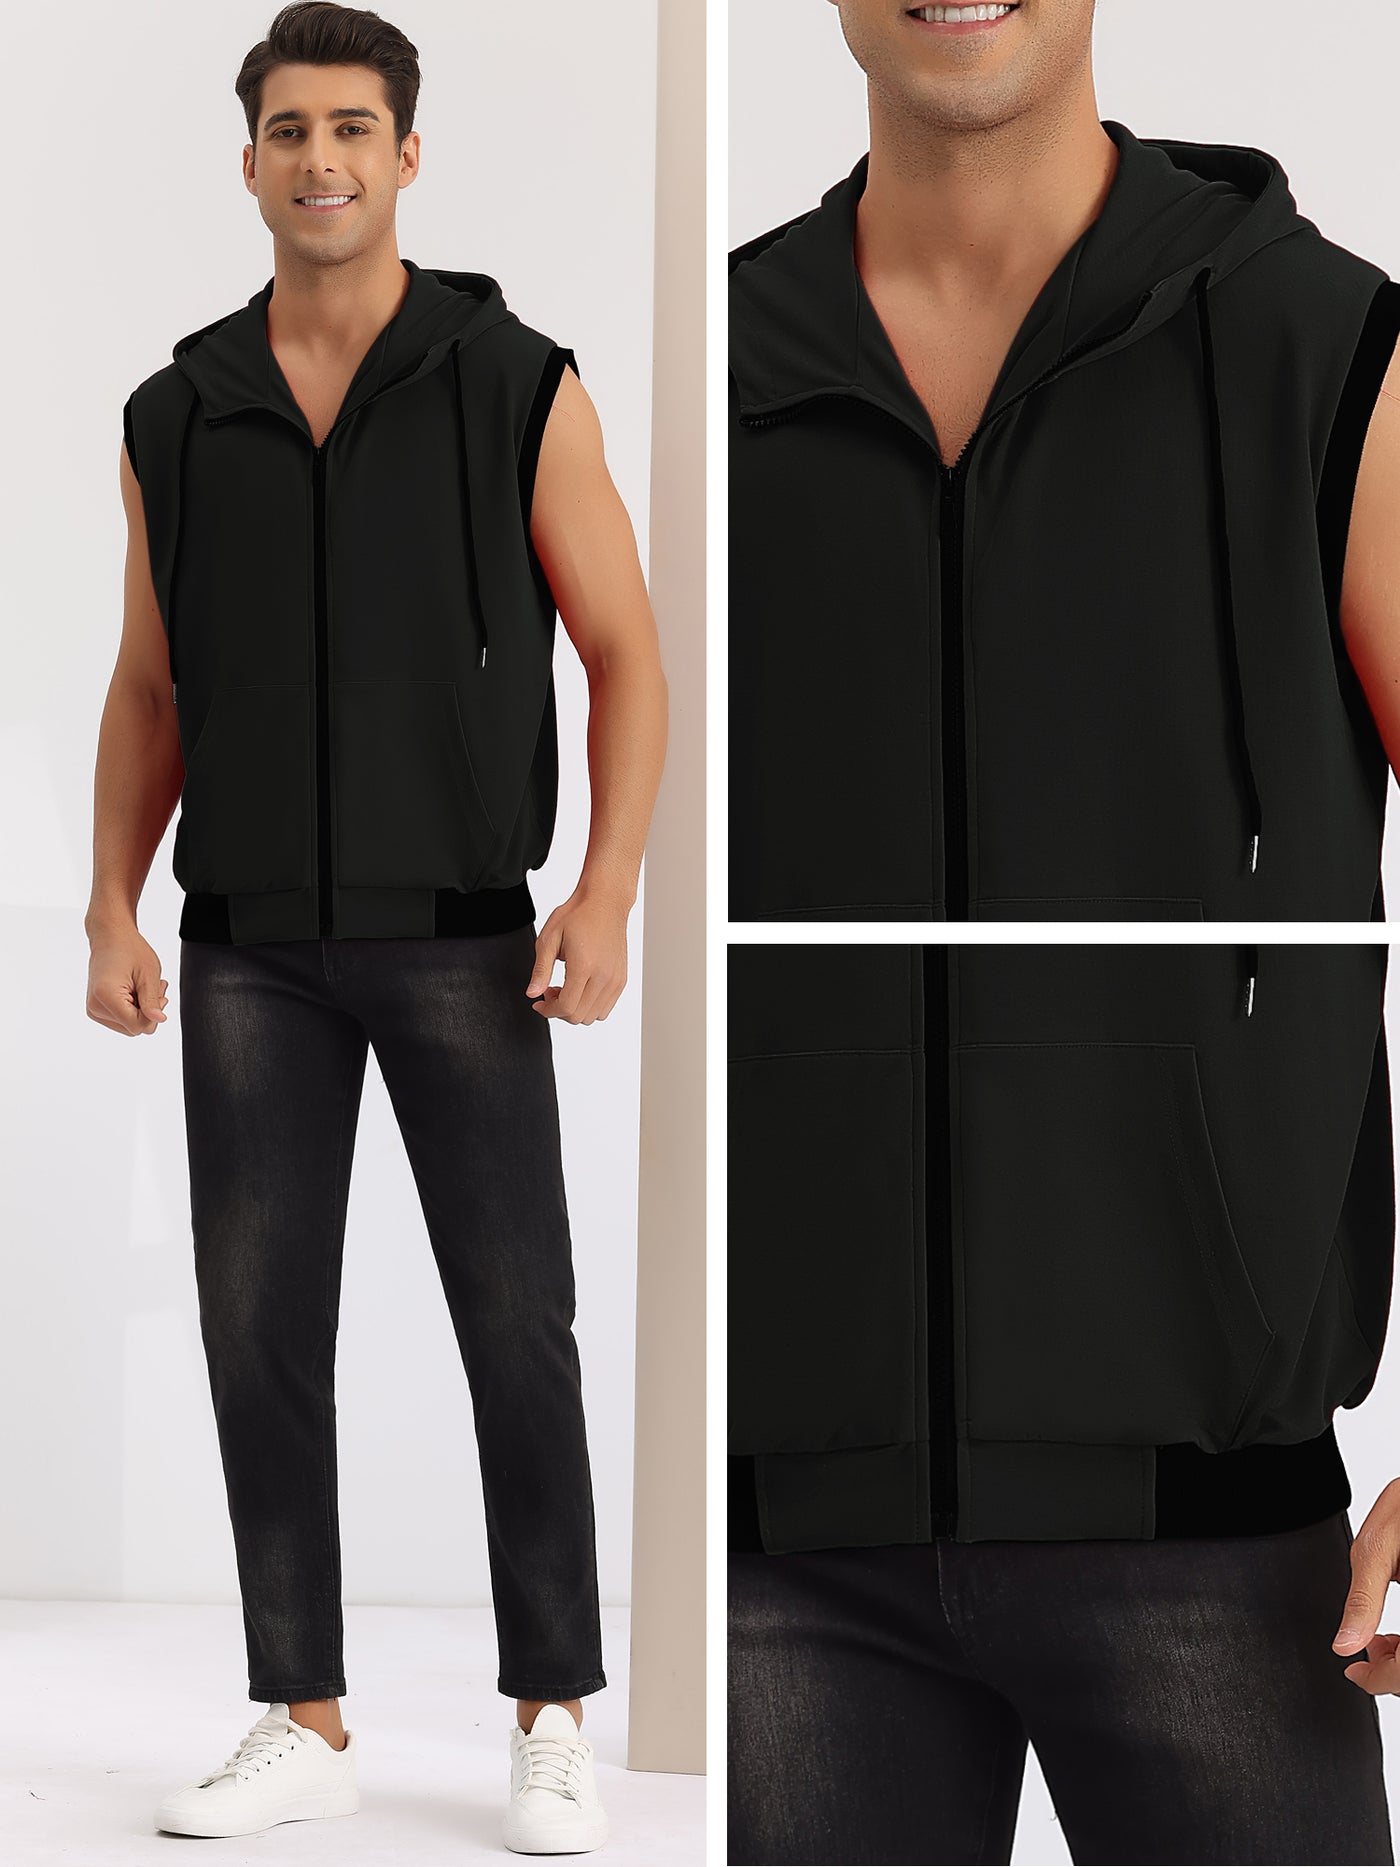 Bublédon Hoodie Vest for Men's Zip Up Sleeveless Drawstring Hooded Sweatshirt